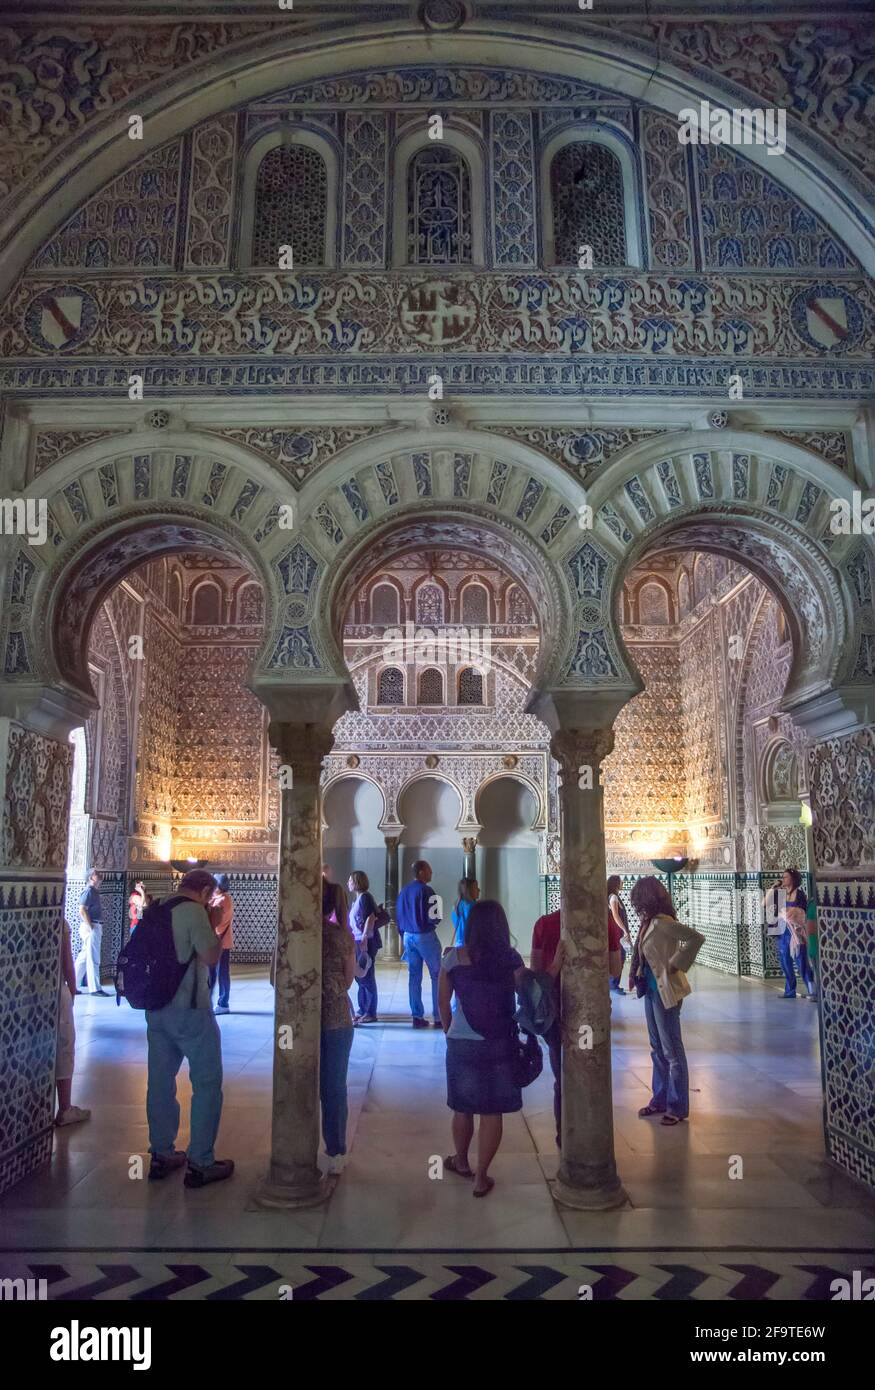 Islamic arches in Moorish Palace inside the Royal Alcazar of Sevilla, Seville, Spain Stock Photo